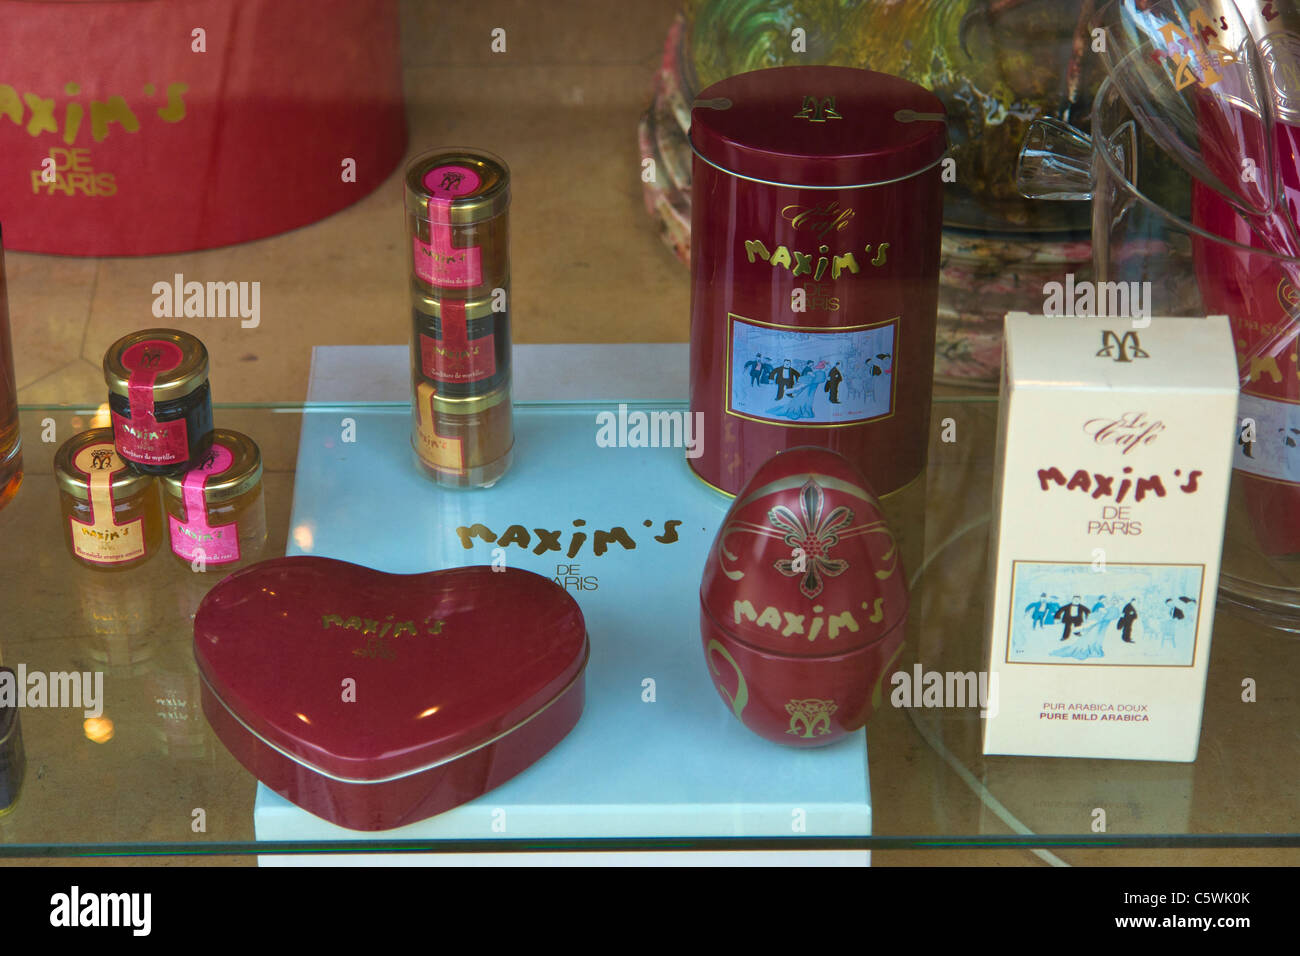 Goods for sale in Maxim's shop, Rue Royale, Paris Stock Photo